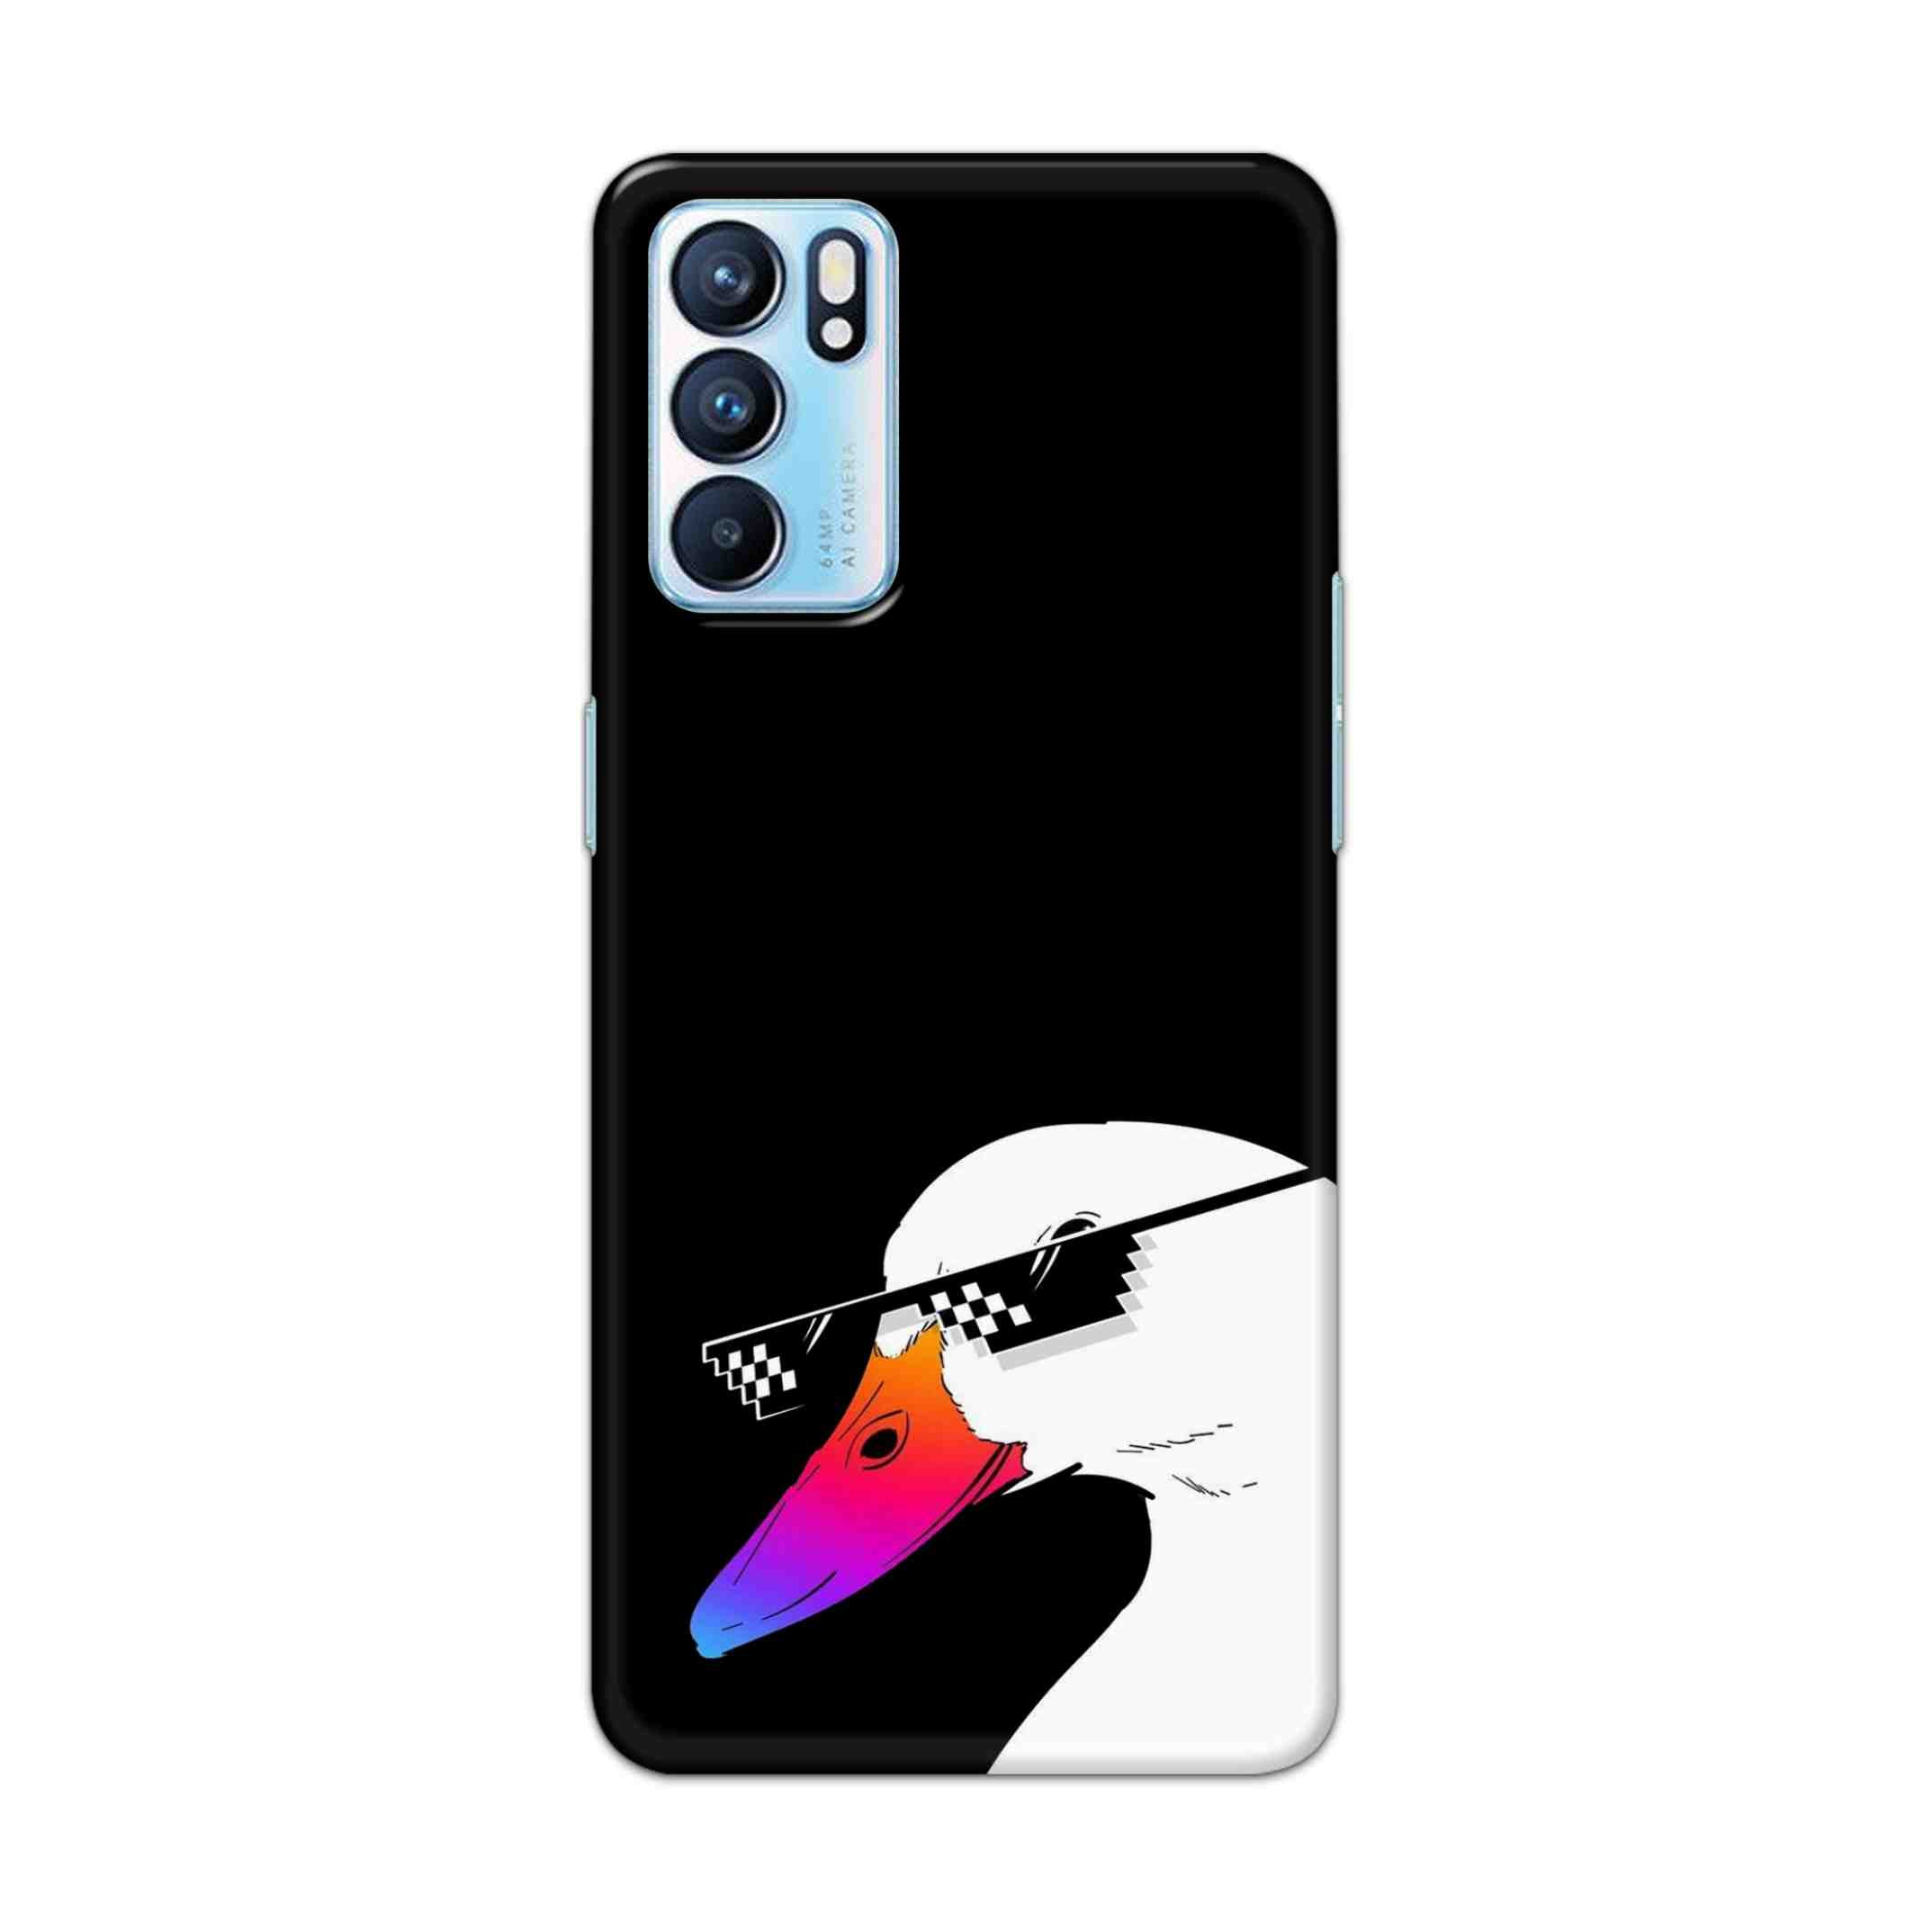 Buy Neon Duck Hard Back Mobile Phone Case Cover For OPPO RENO 6 5G Online